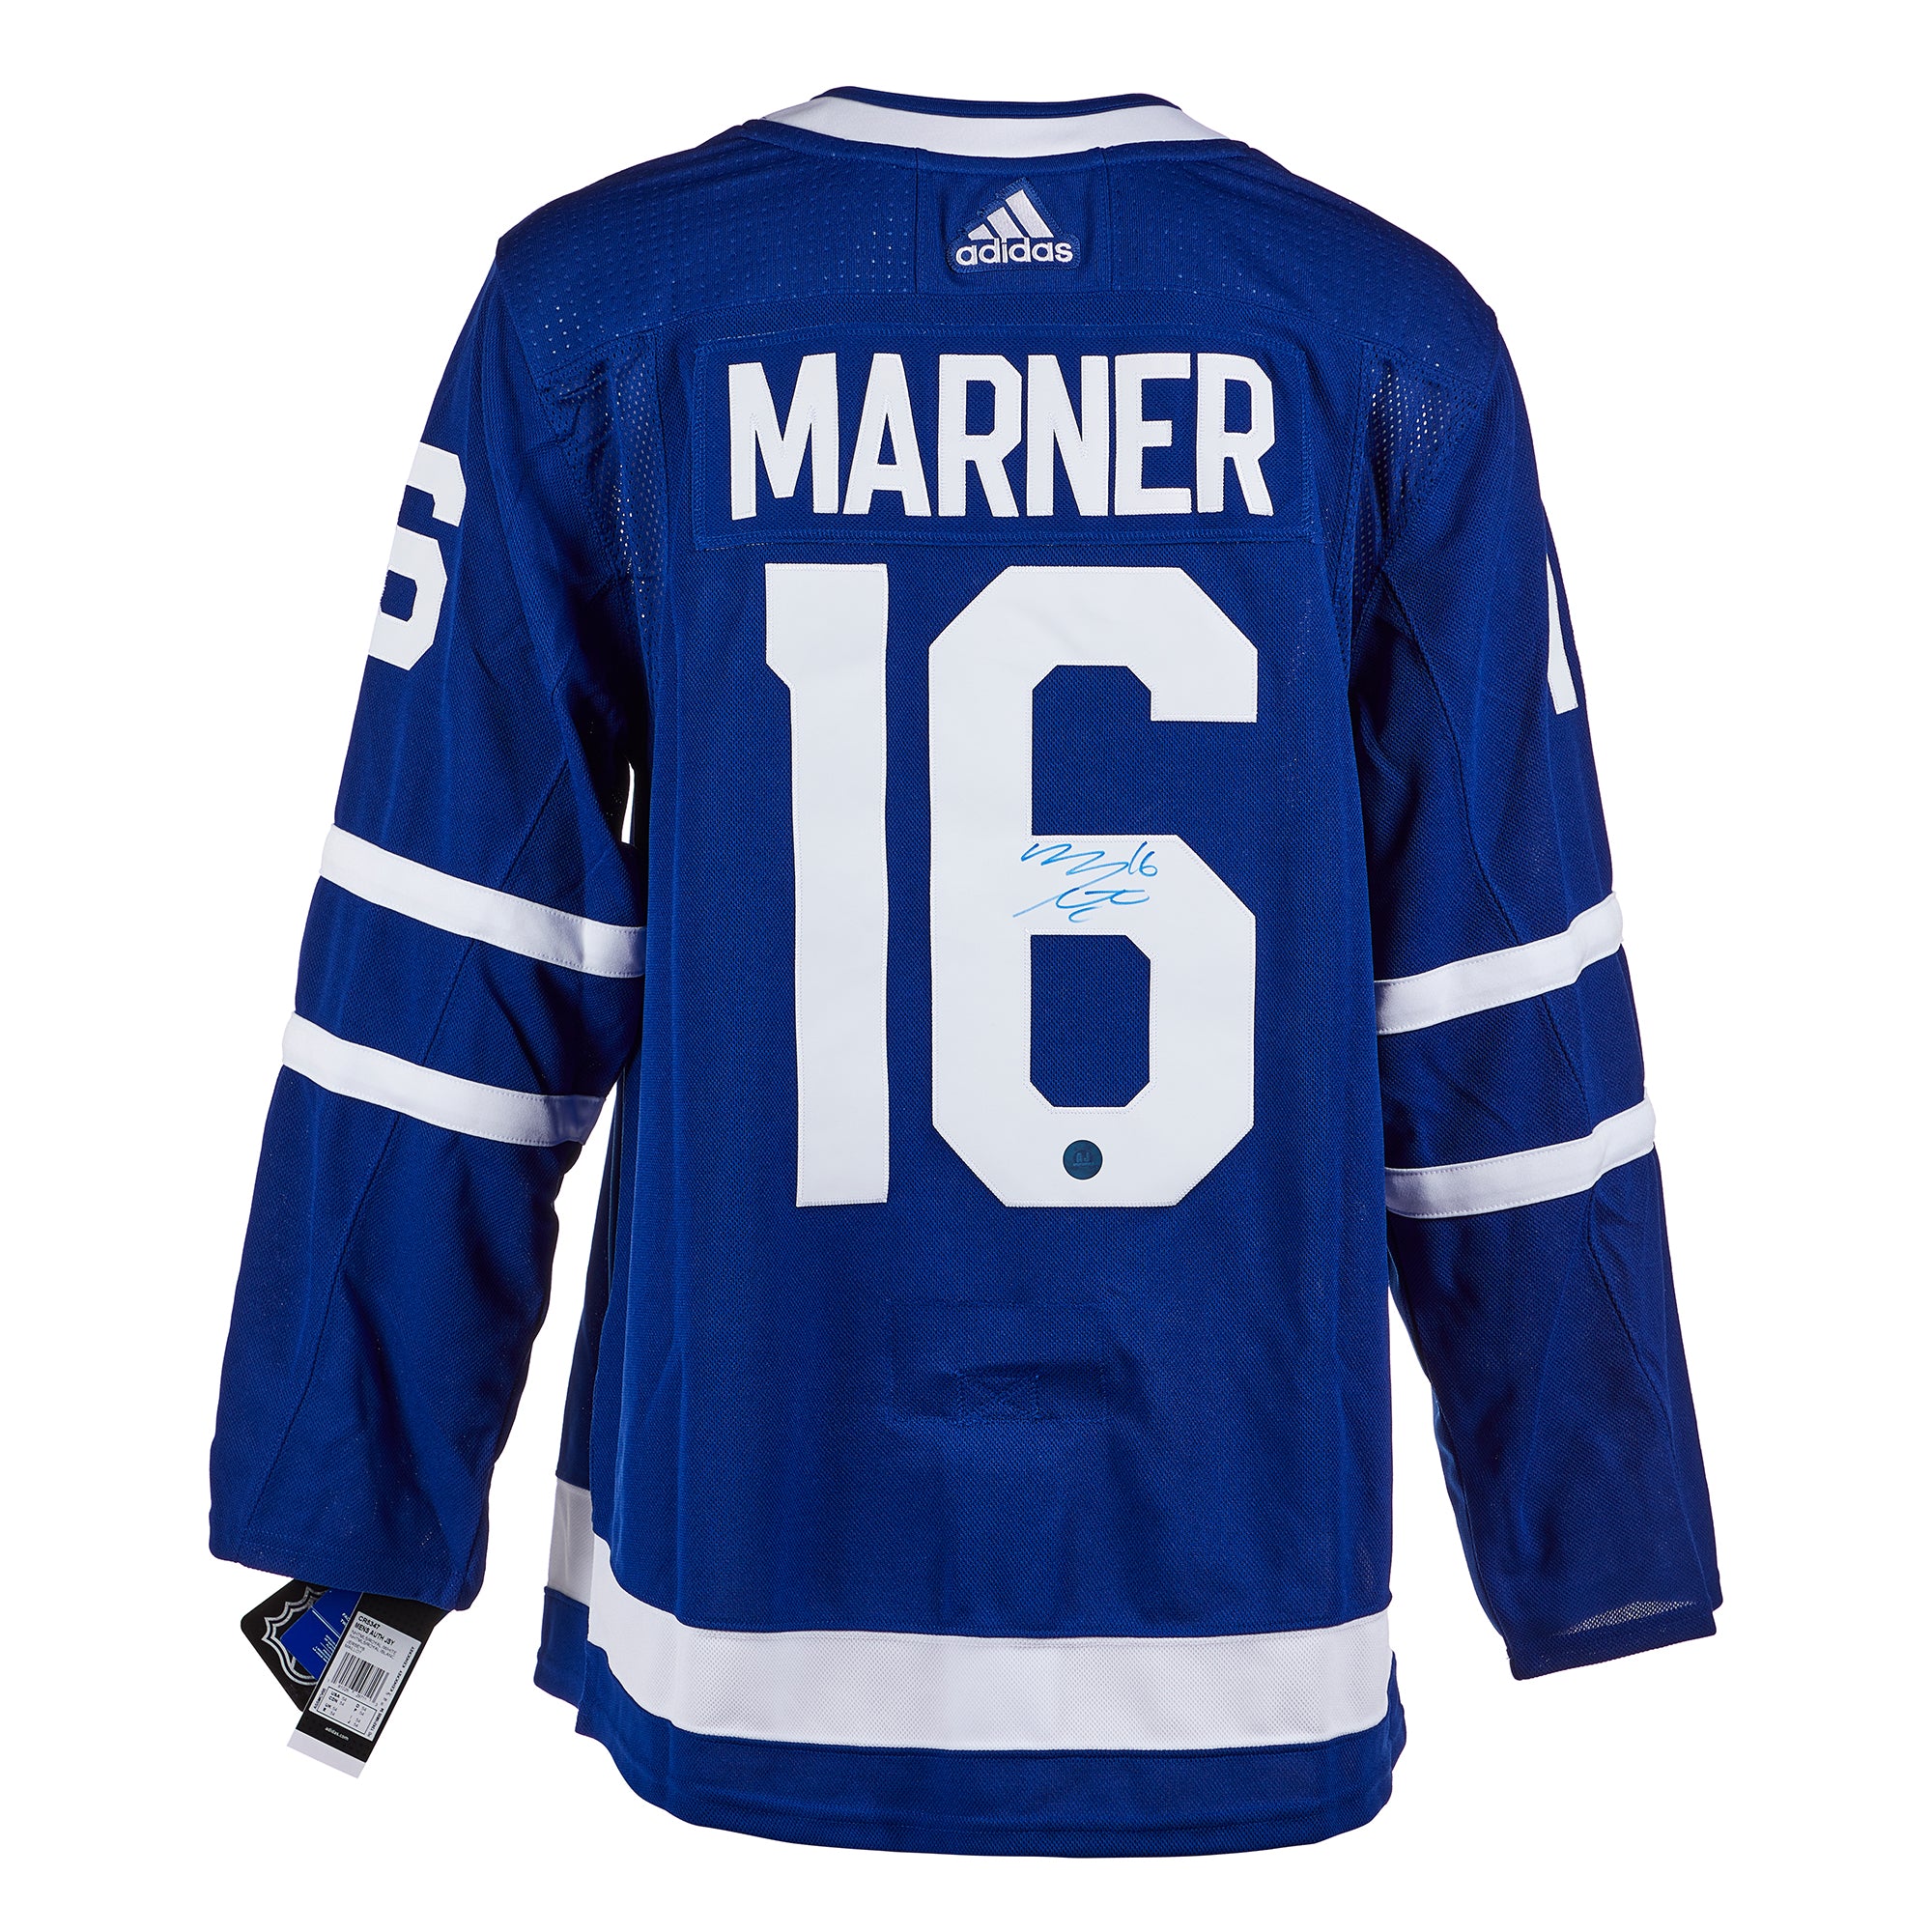 Mitch Marner Toronto Maple Leafs Jersey GOAT - Mitch Marner - Magnet